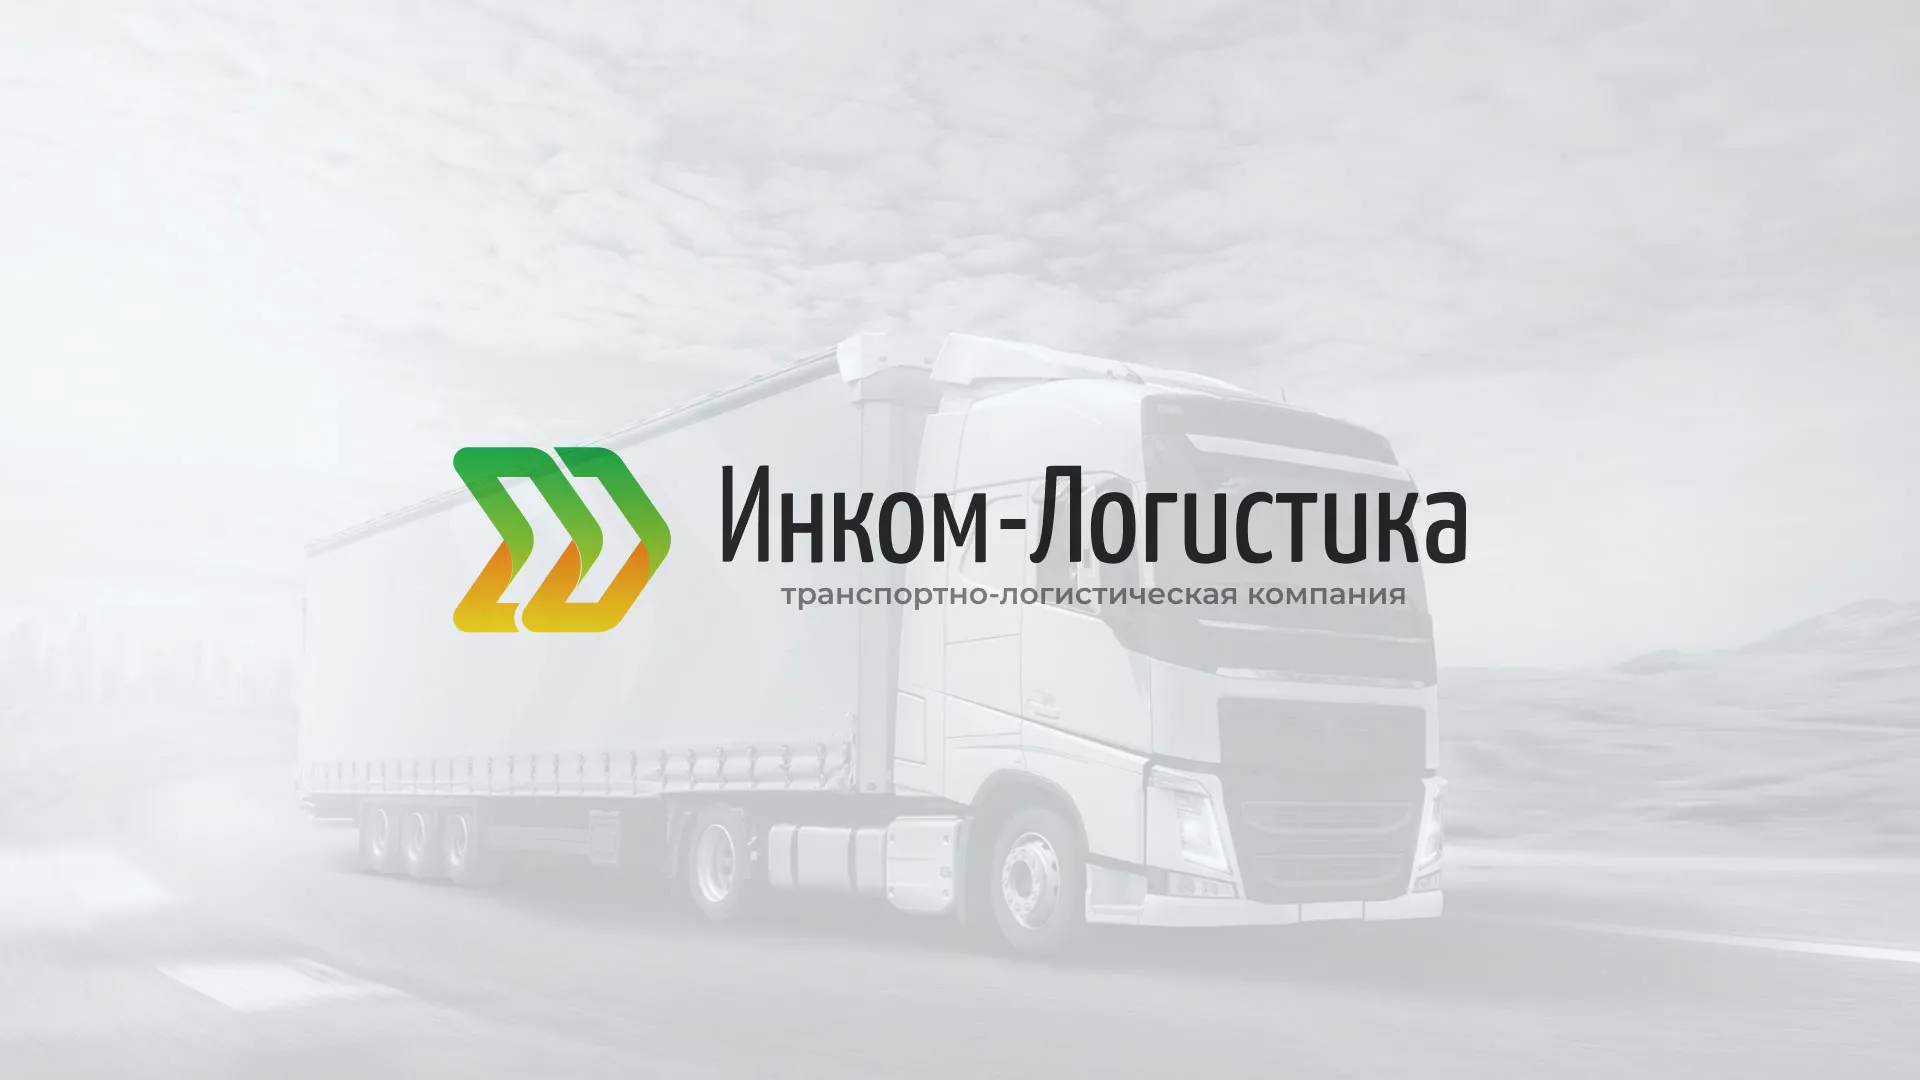 Разработка логотипа и сайта компании «Инком-Логистика» в Малоярославце